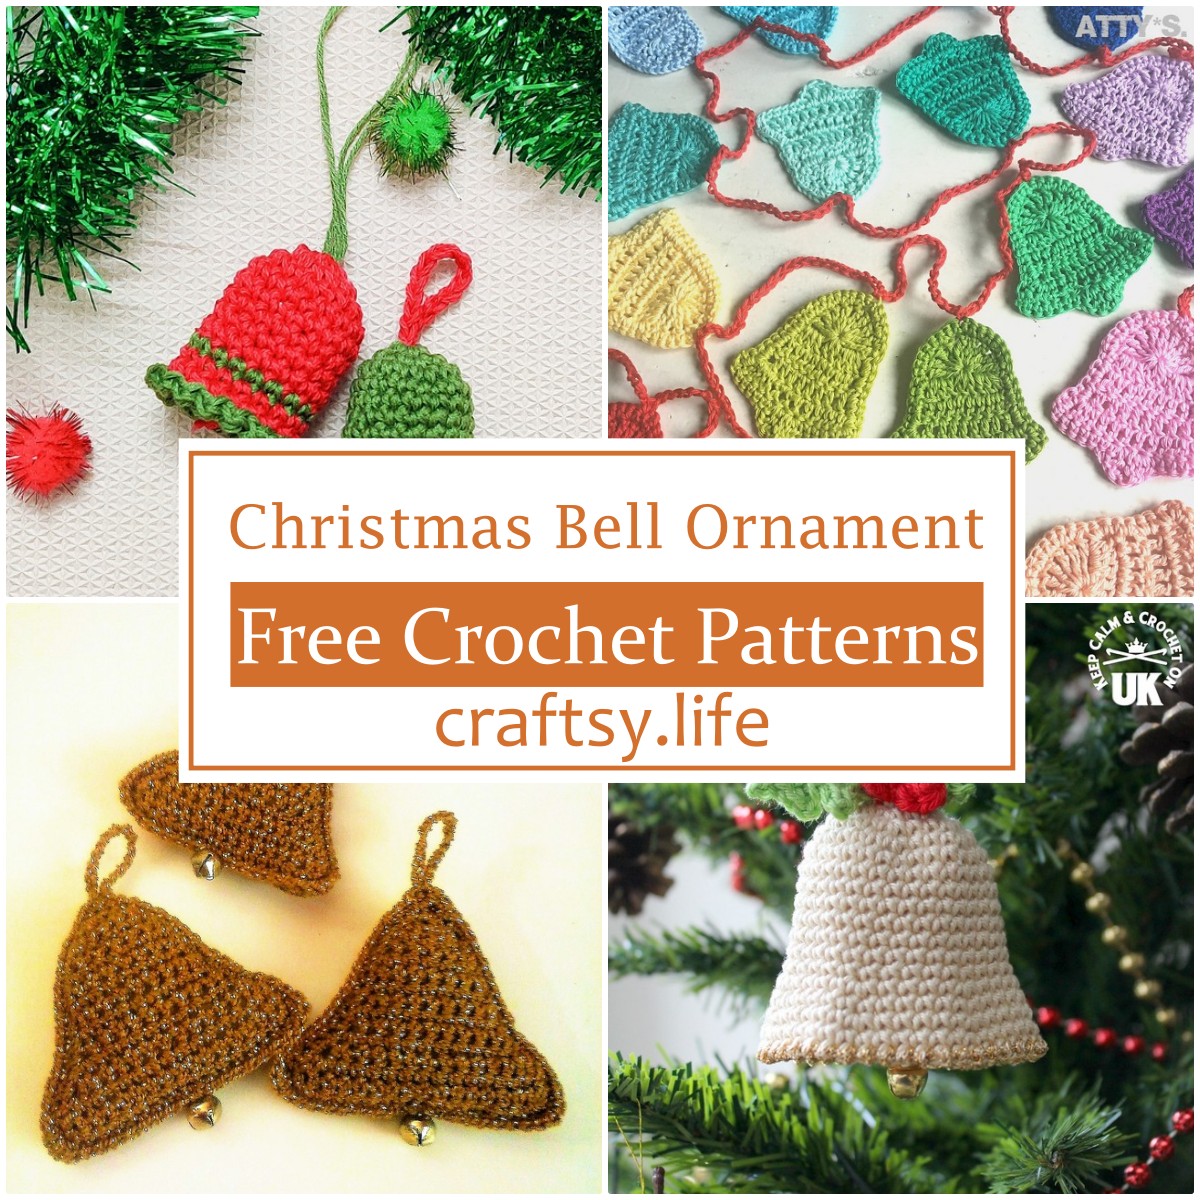 Free Crochet Christmas Bell Ornament Patterns